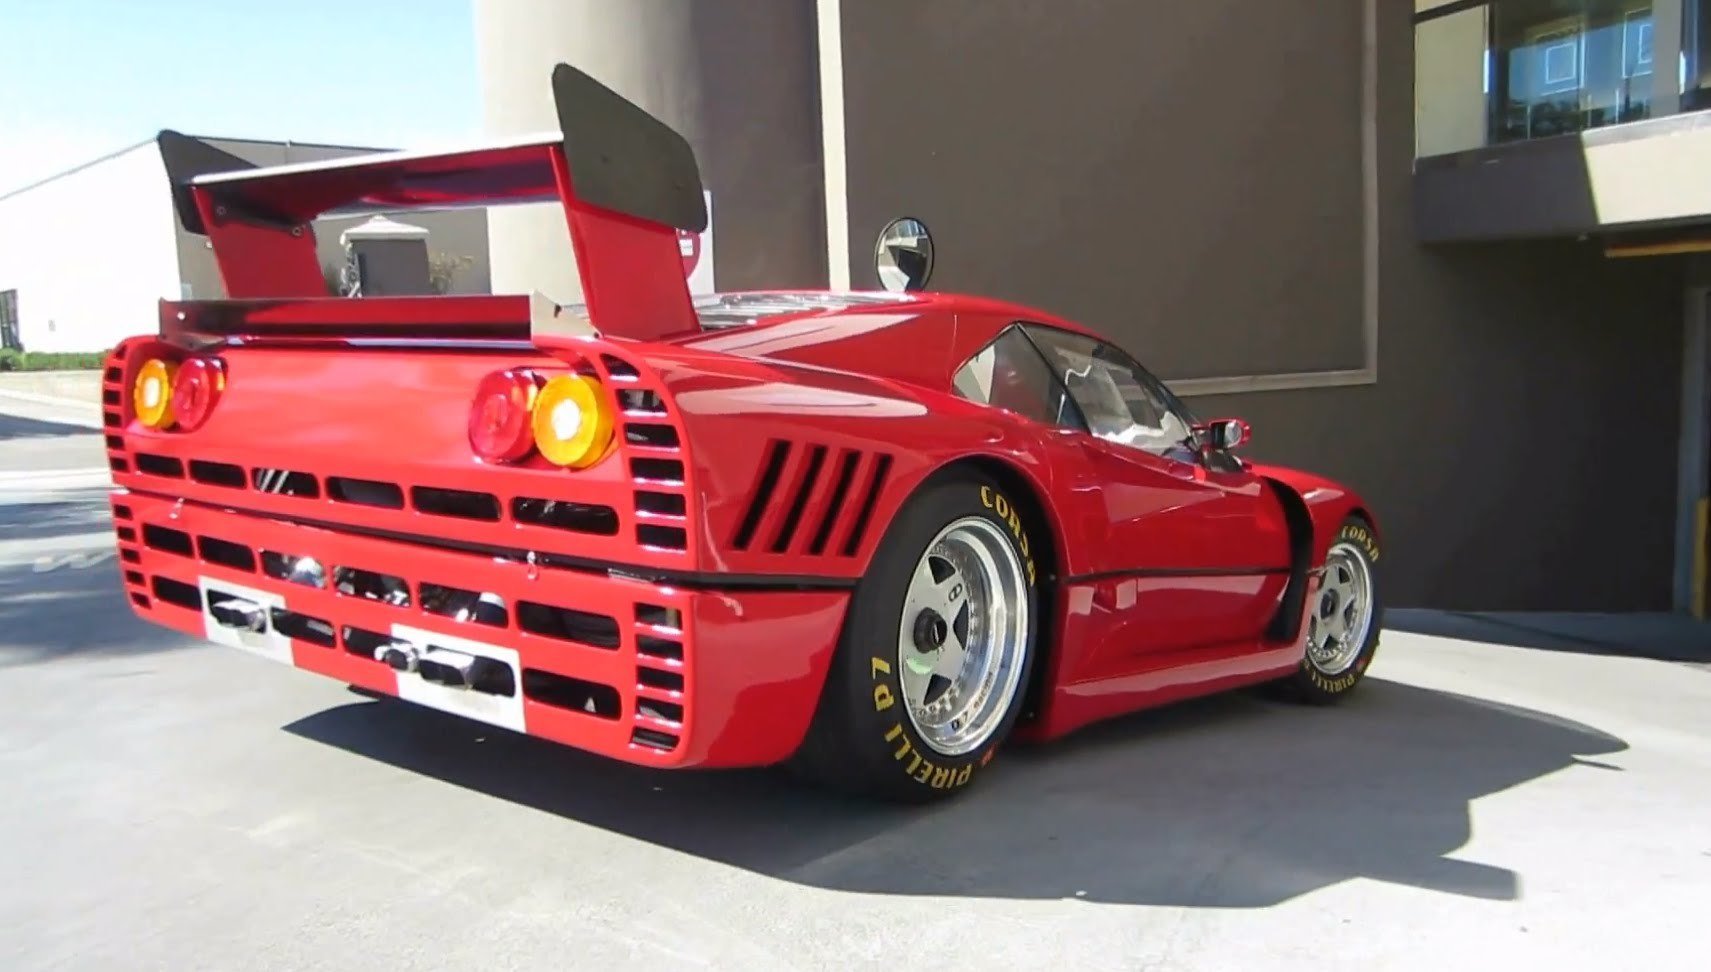 Ferrari 288 GTO Evoluzione is geweldig bruut!